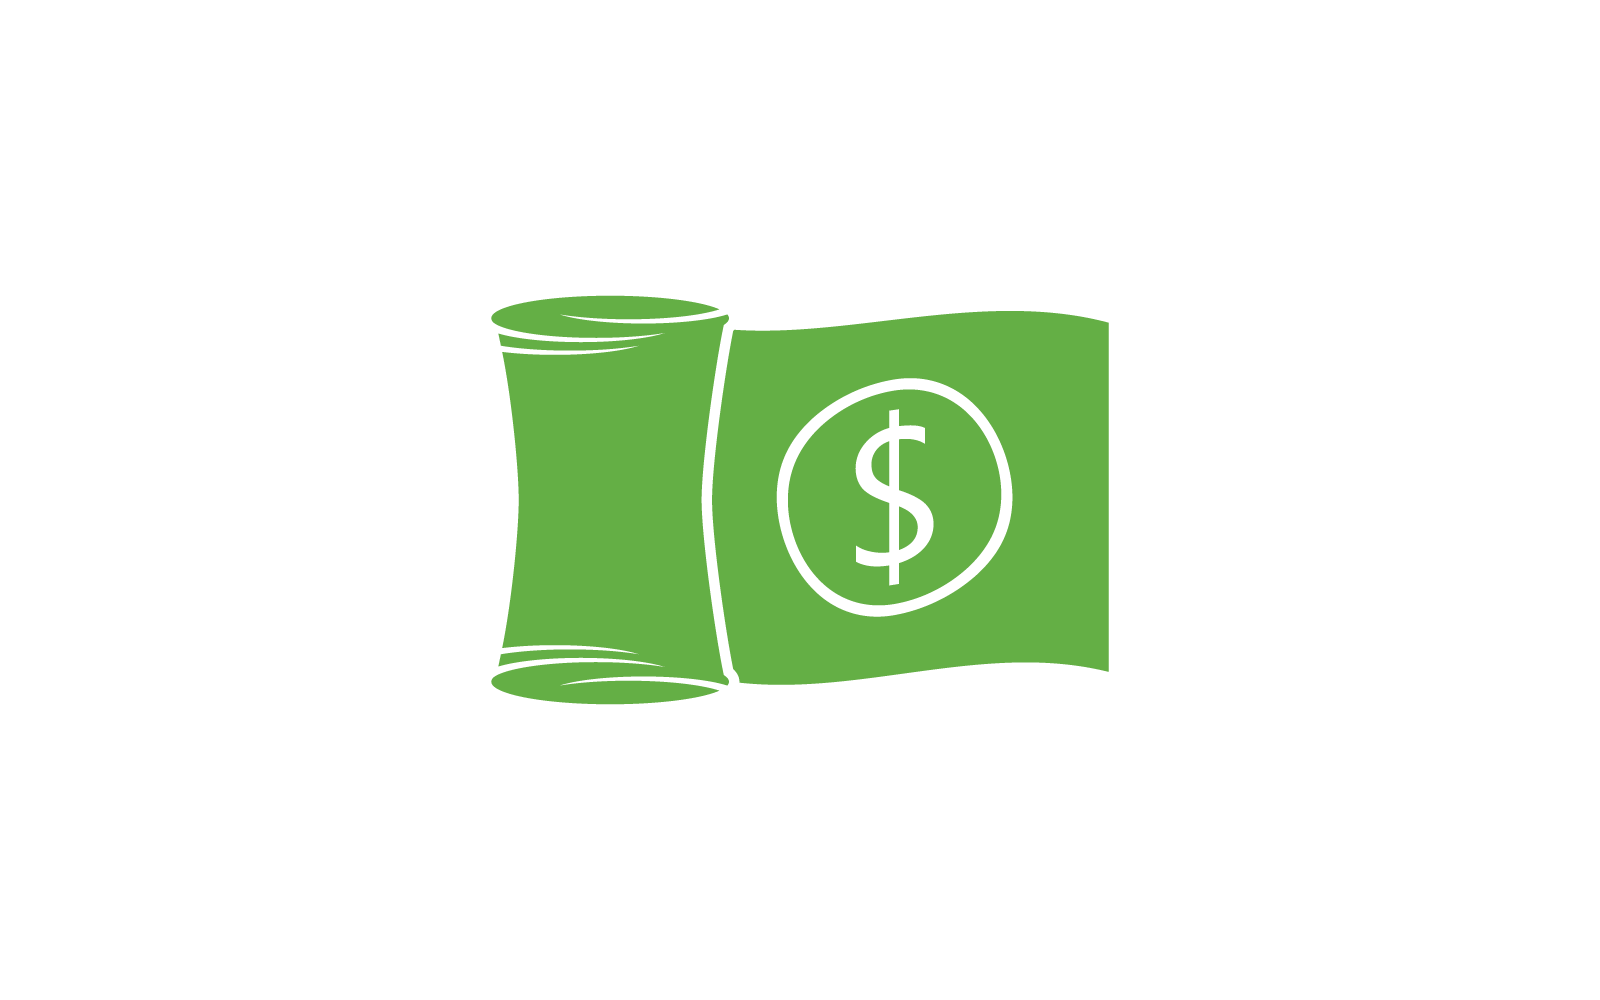 İş para bankacılığı logosu illüstrasyon vektör düz tasarımı